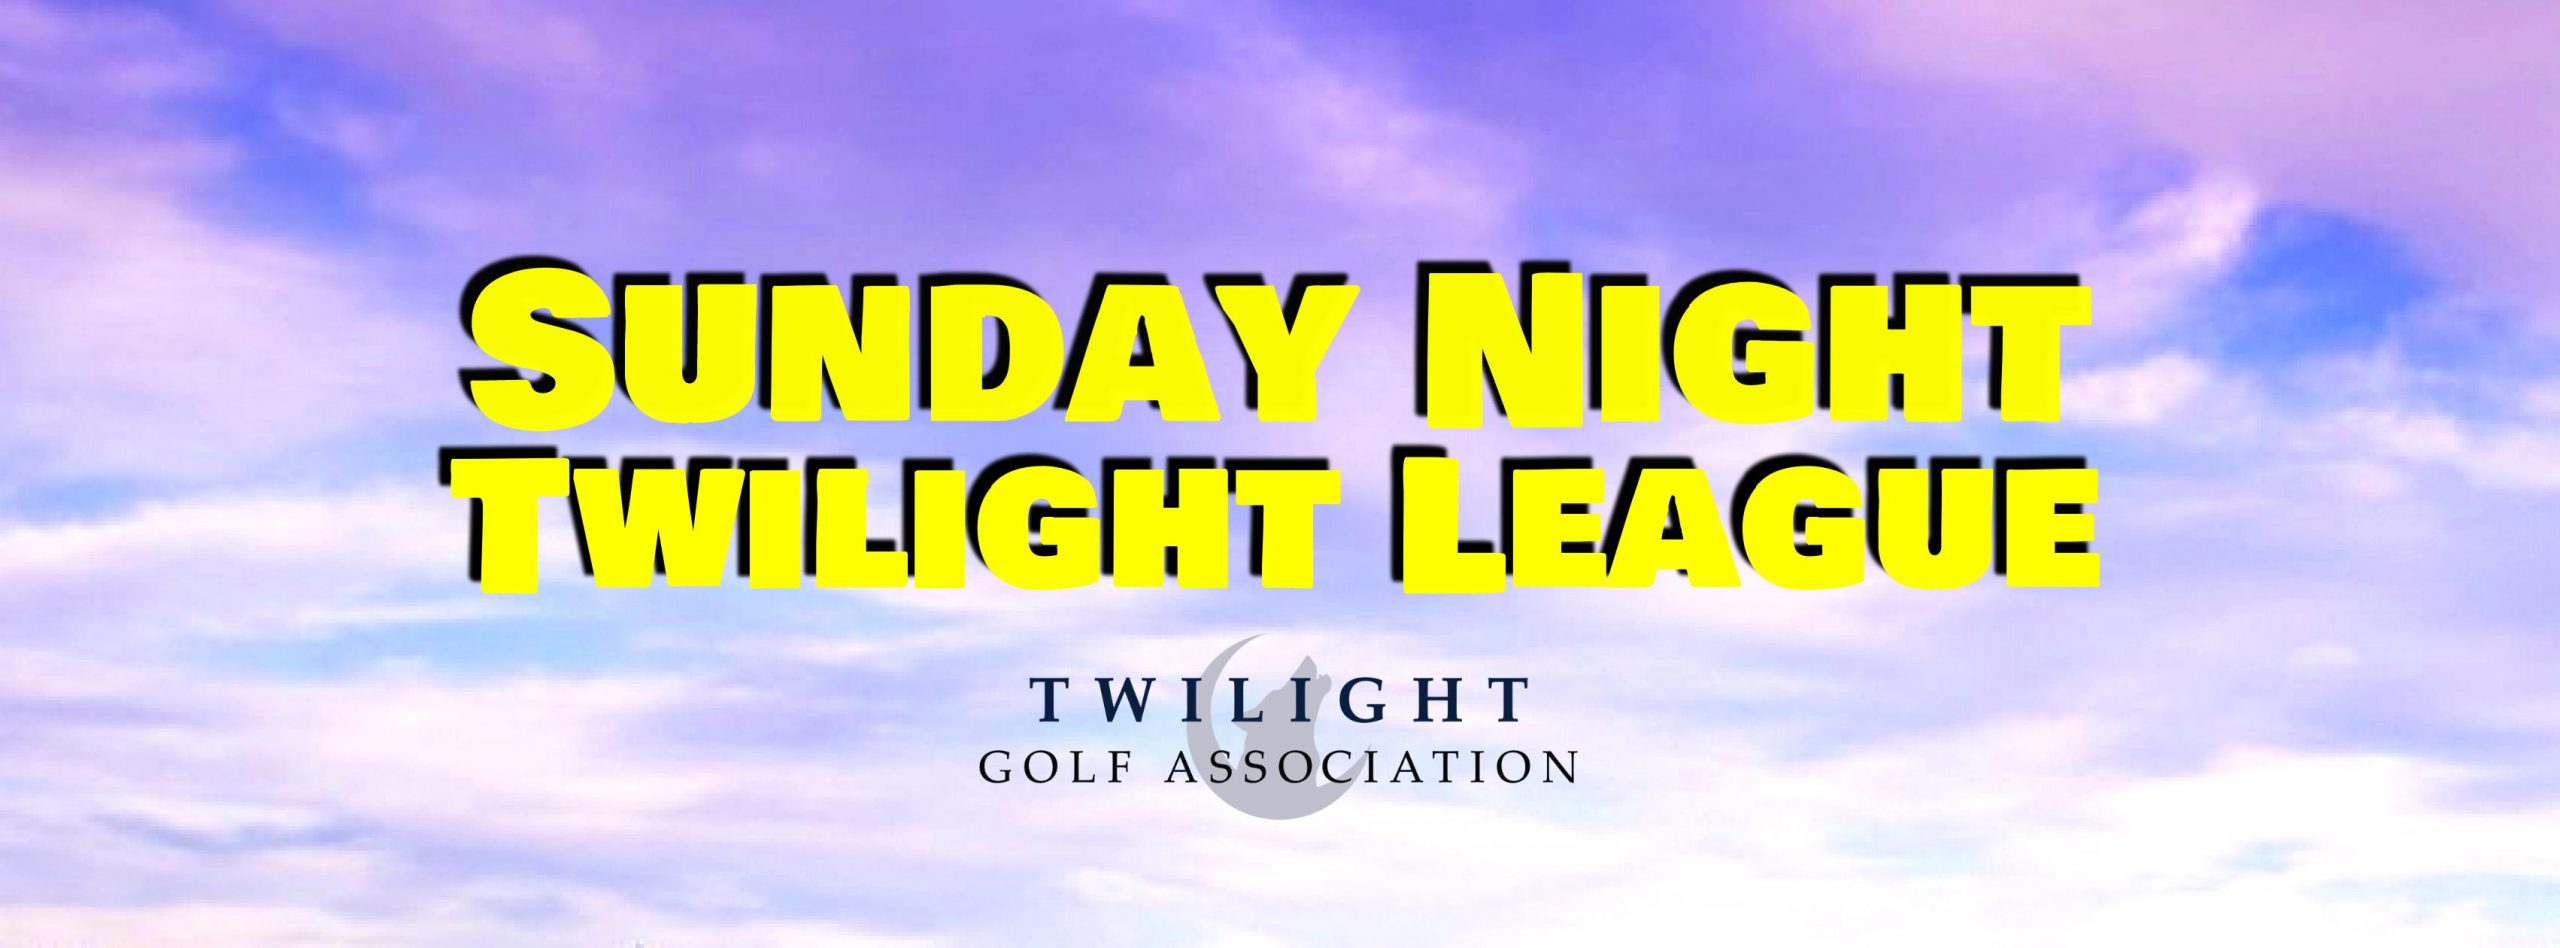 Sunday Night Twilight League at Western Skies Golf Club